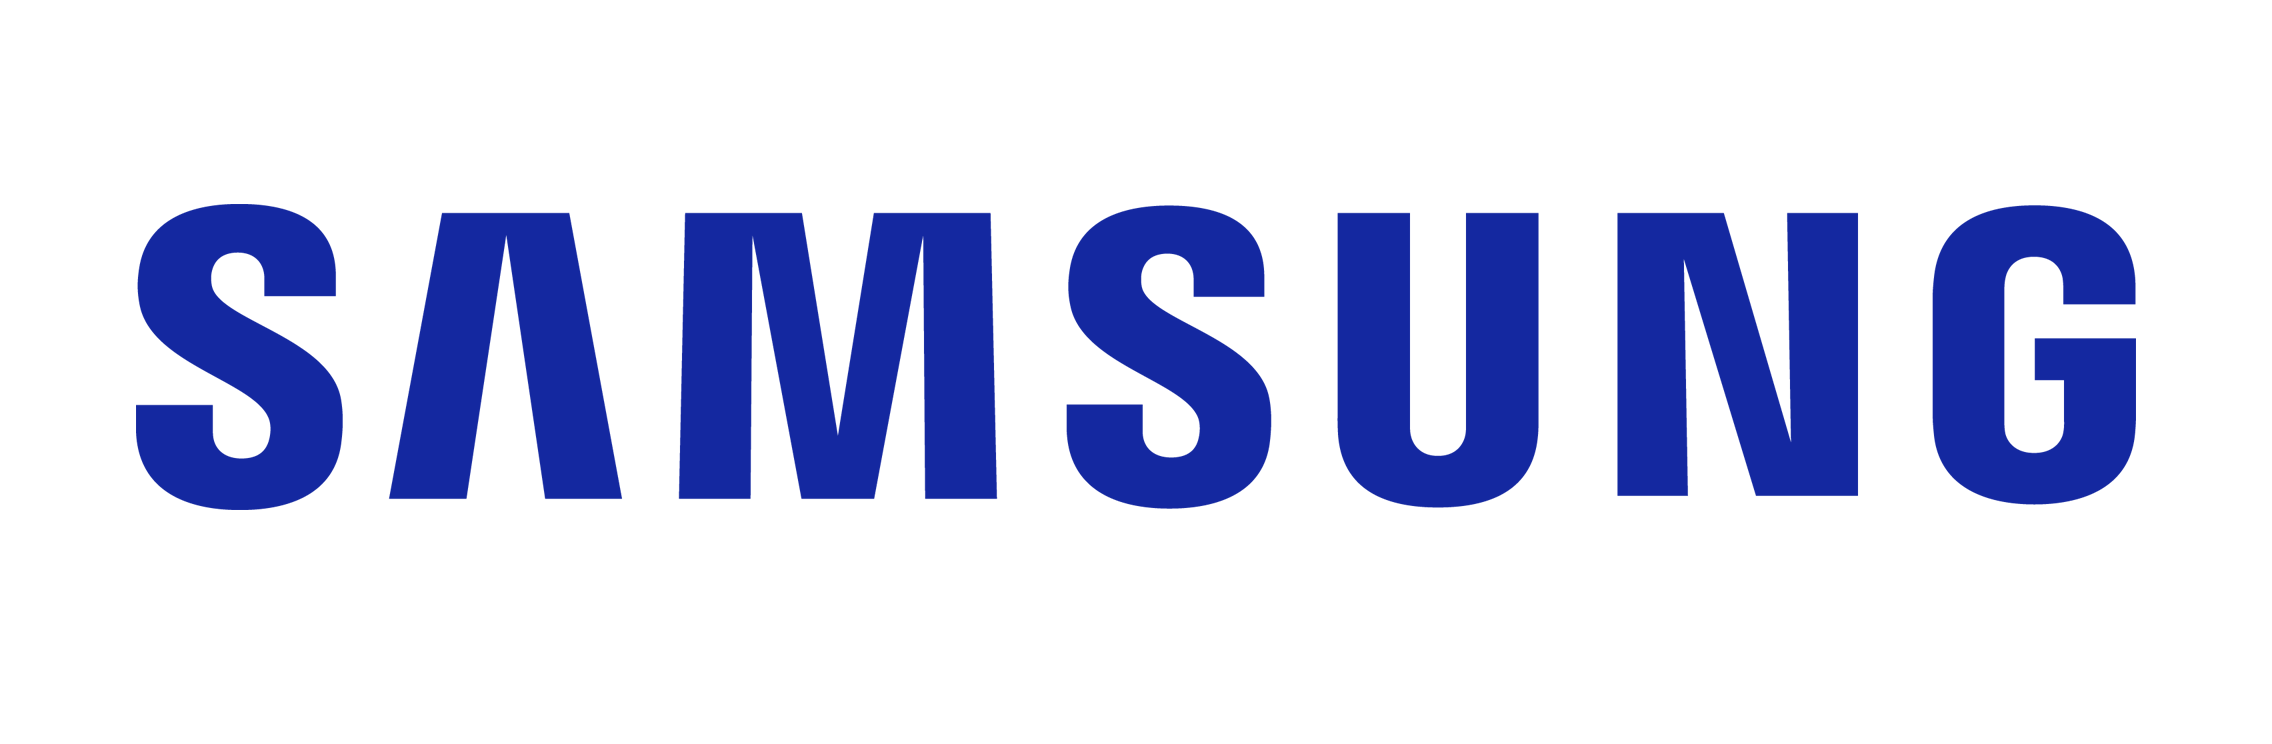 Logo Samsung 2020 - KibrisPDR